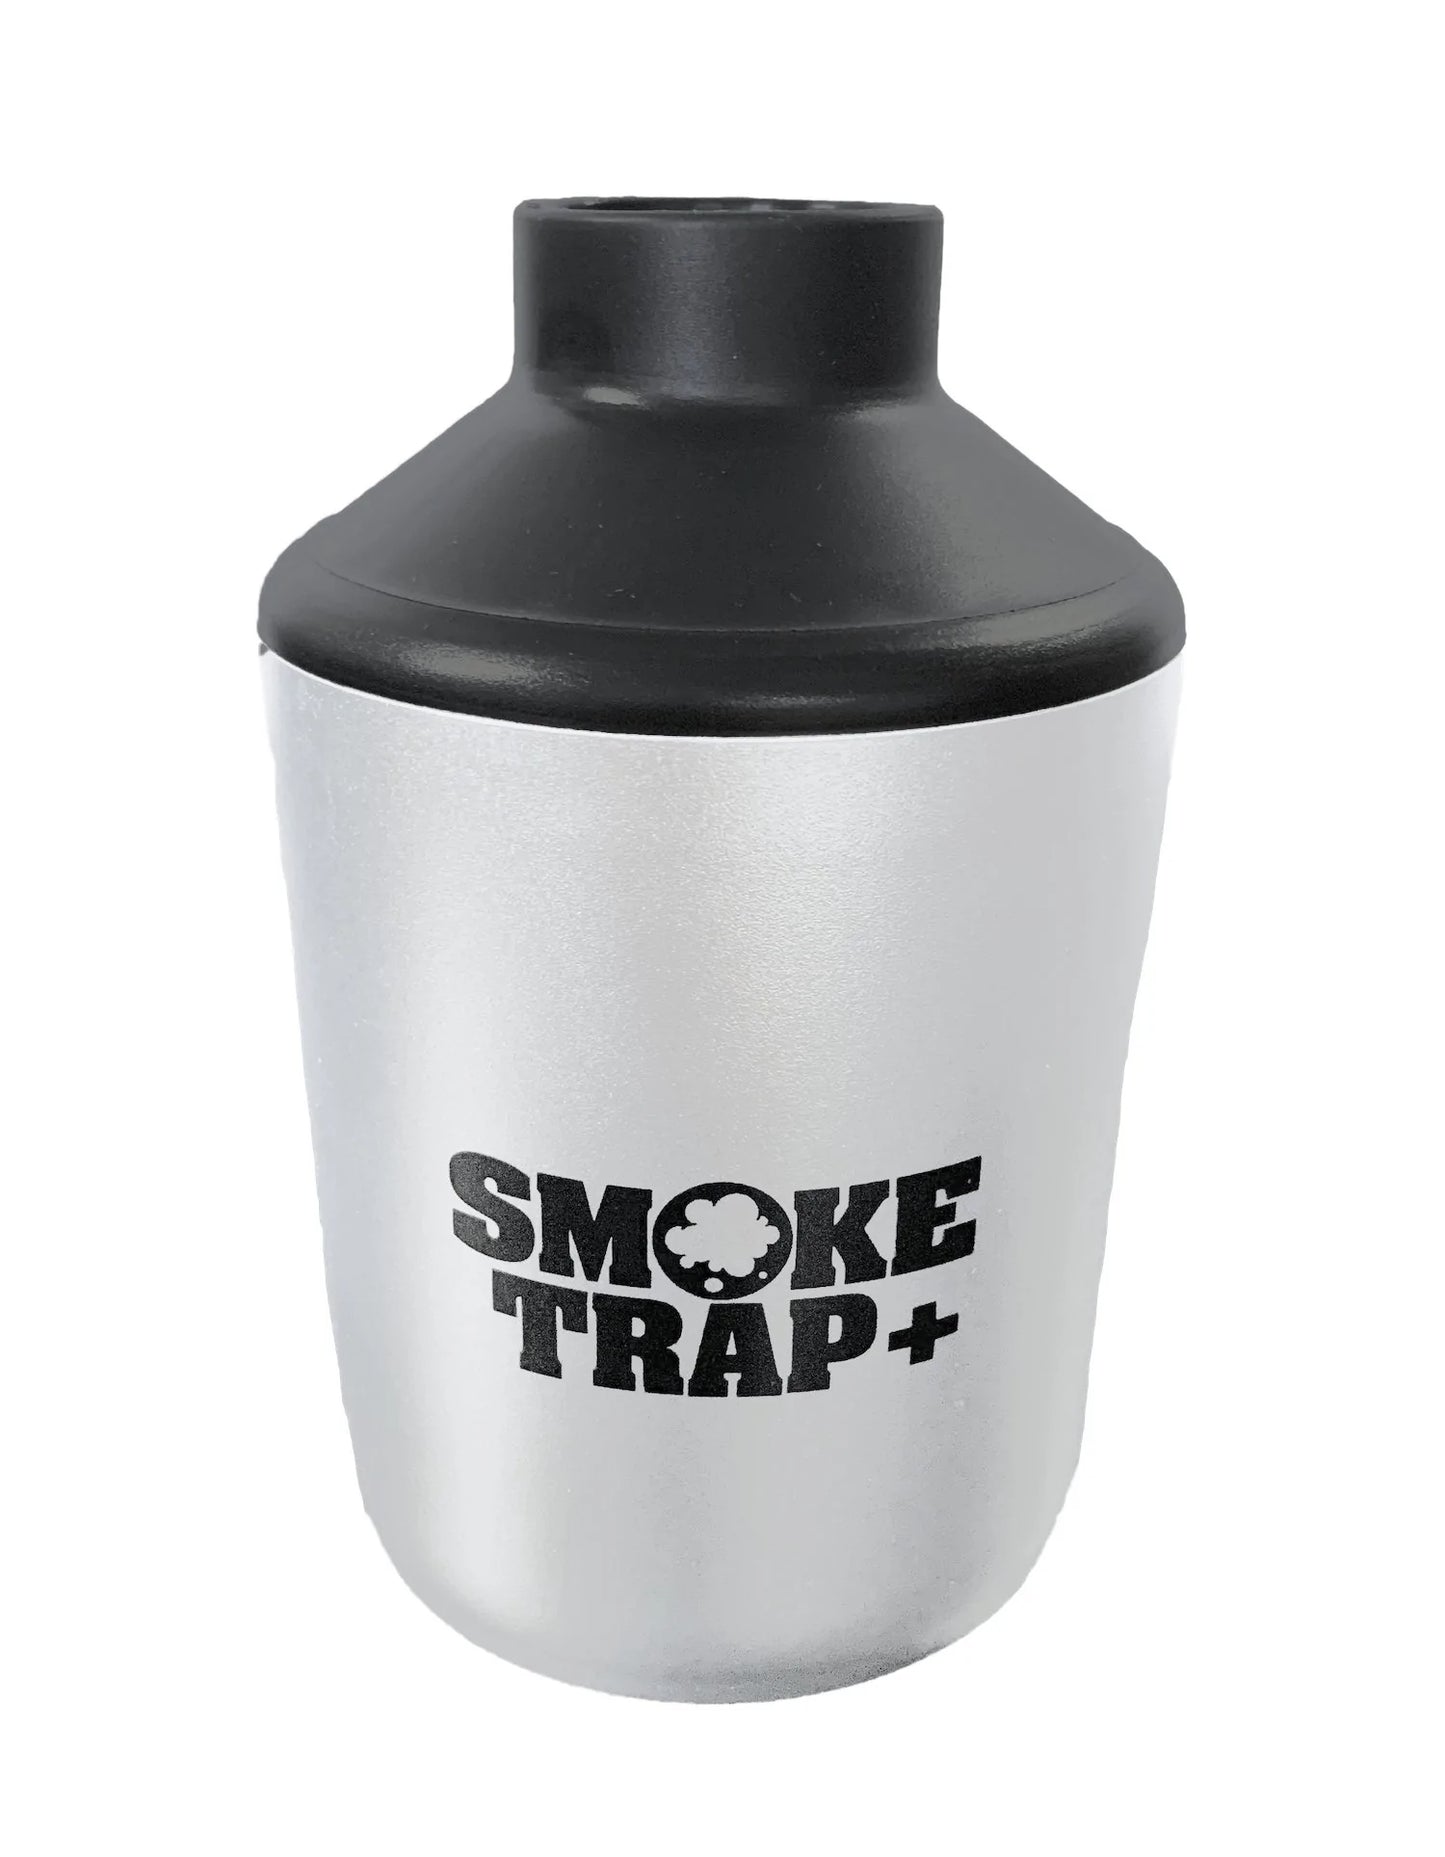 SMOKE TRAP+ Smoking Filtration System